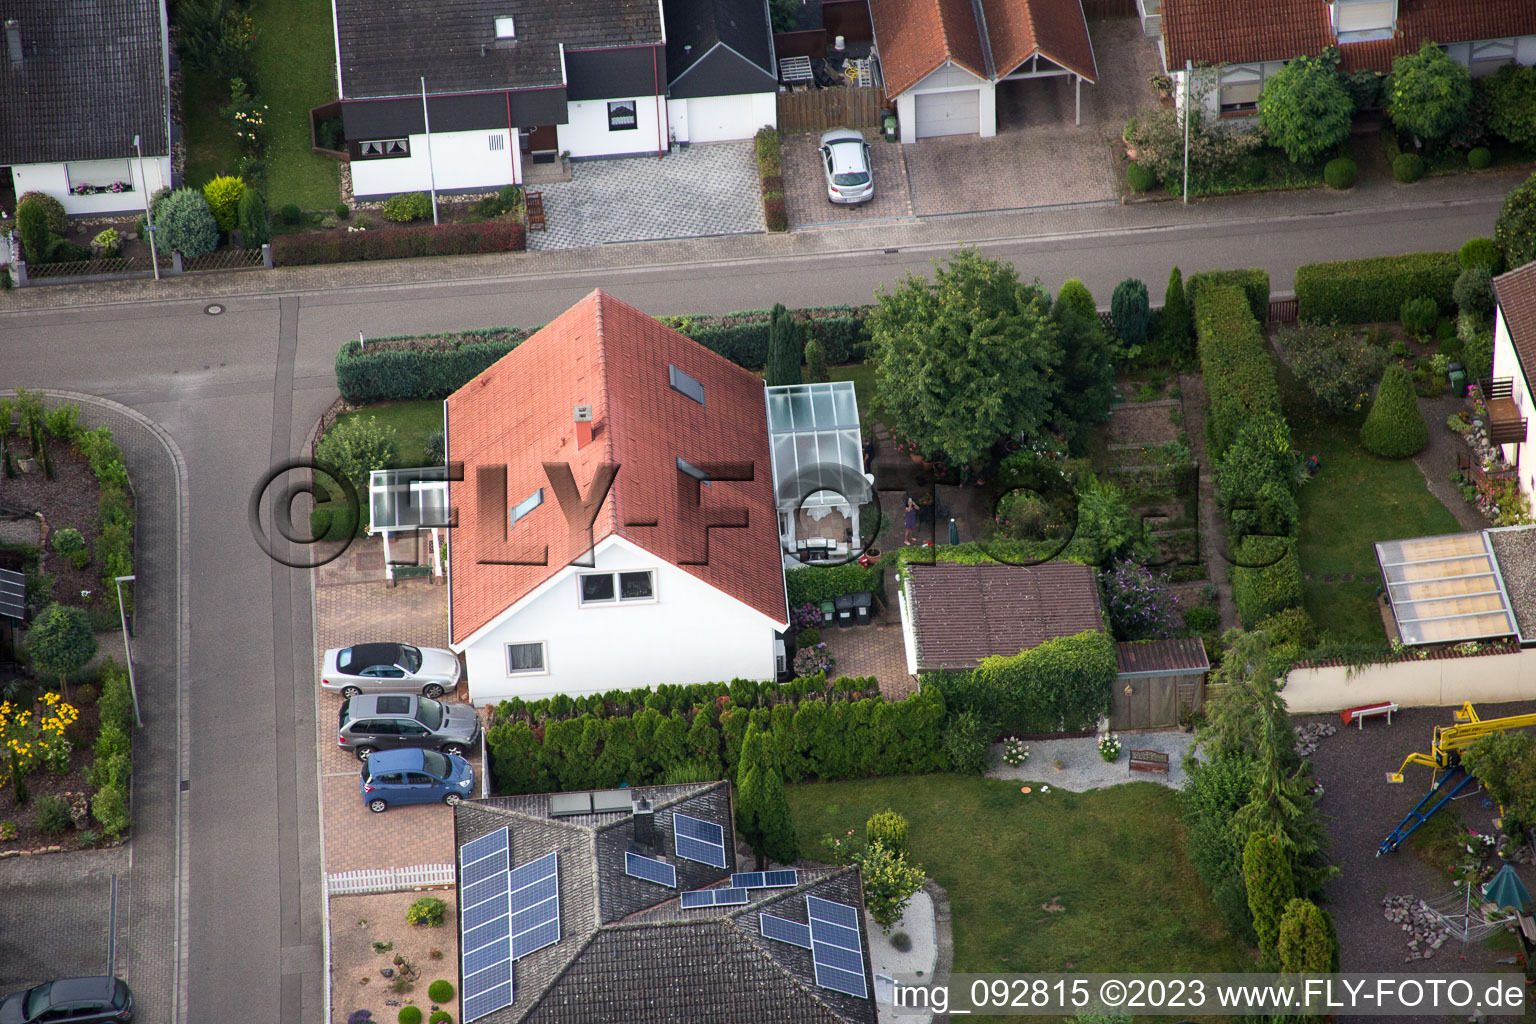 Maxburgstr in the district Billigheim in Billigheim-Ingenheim in the state Rhineland-Palatinate, Germany seen from a drone